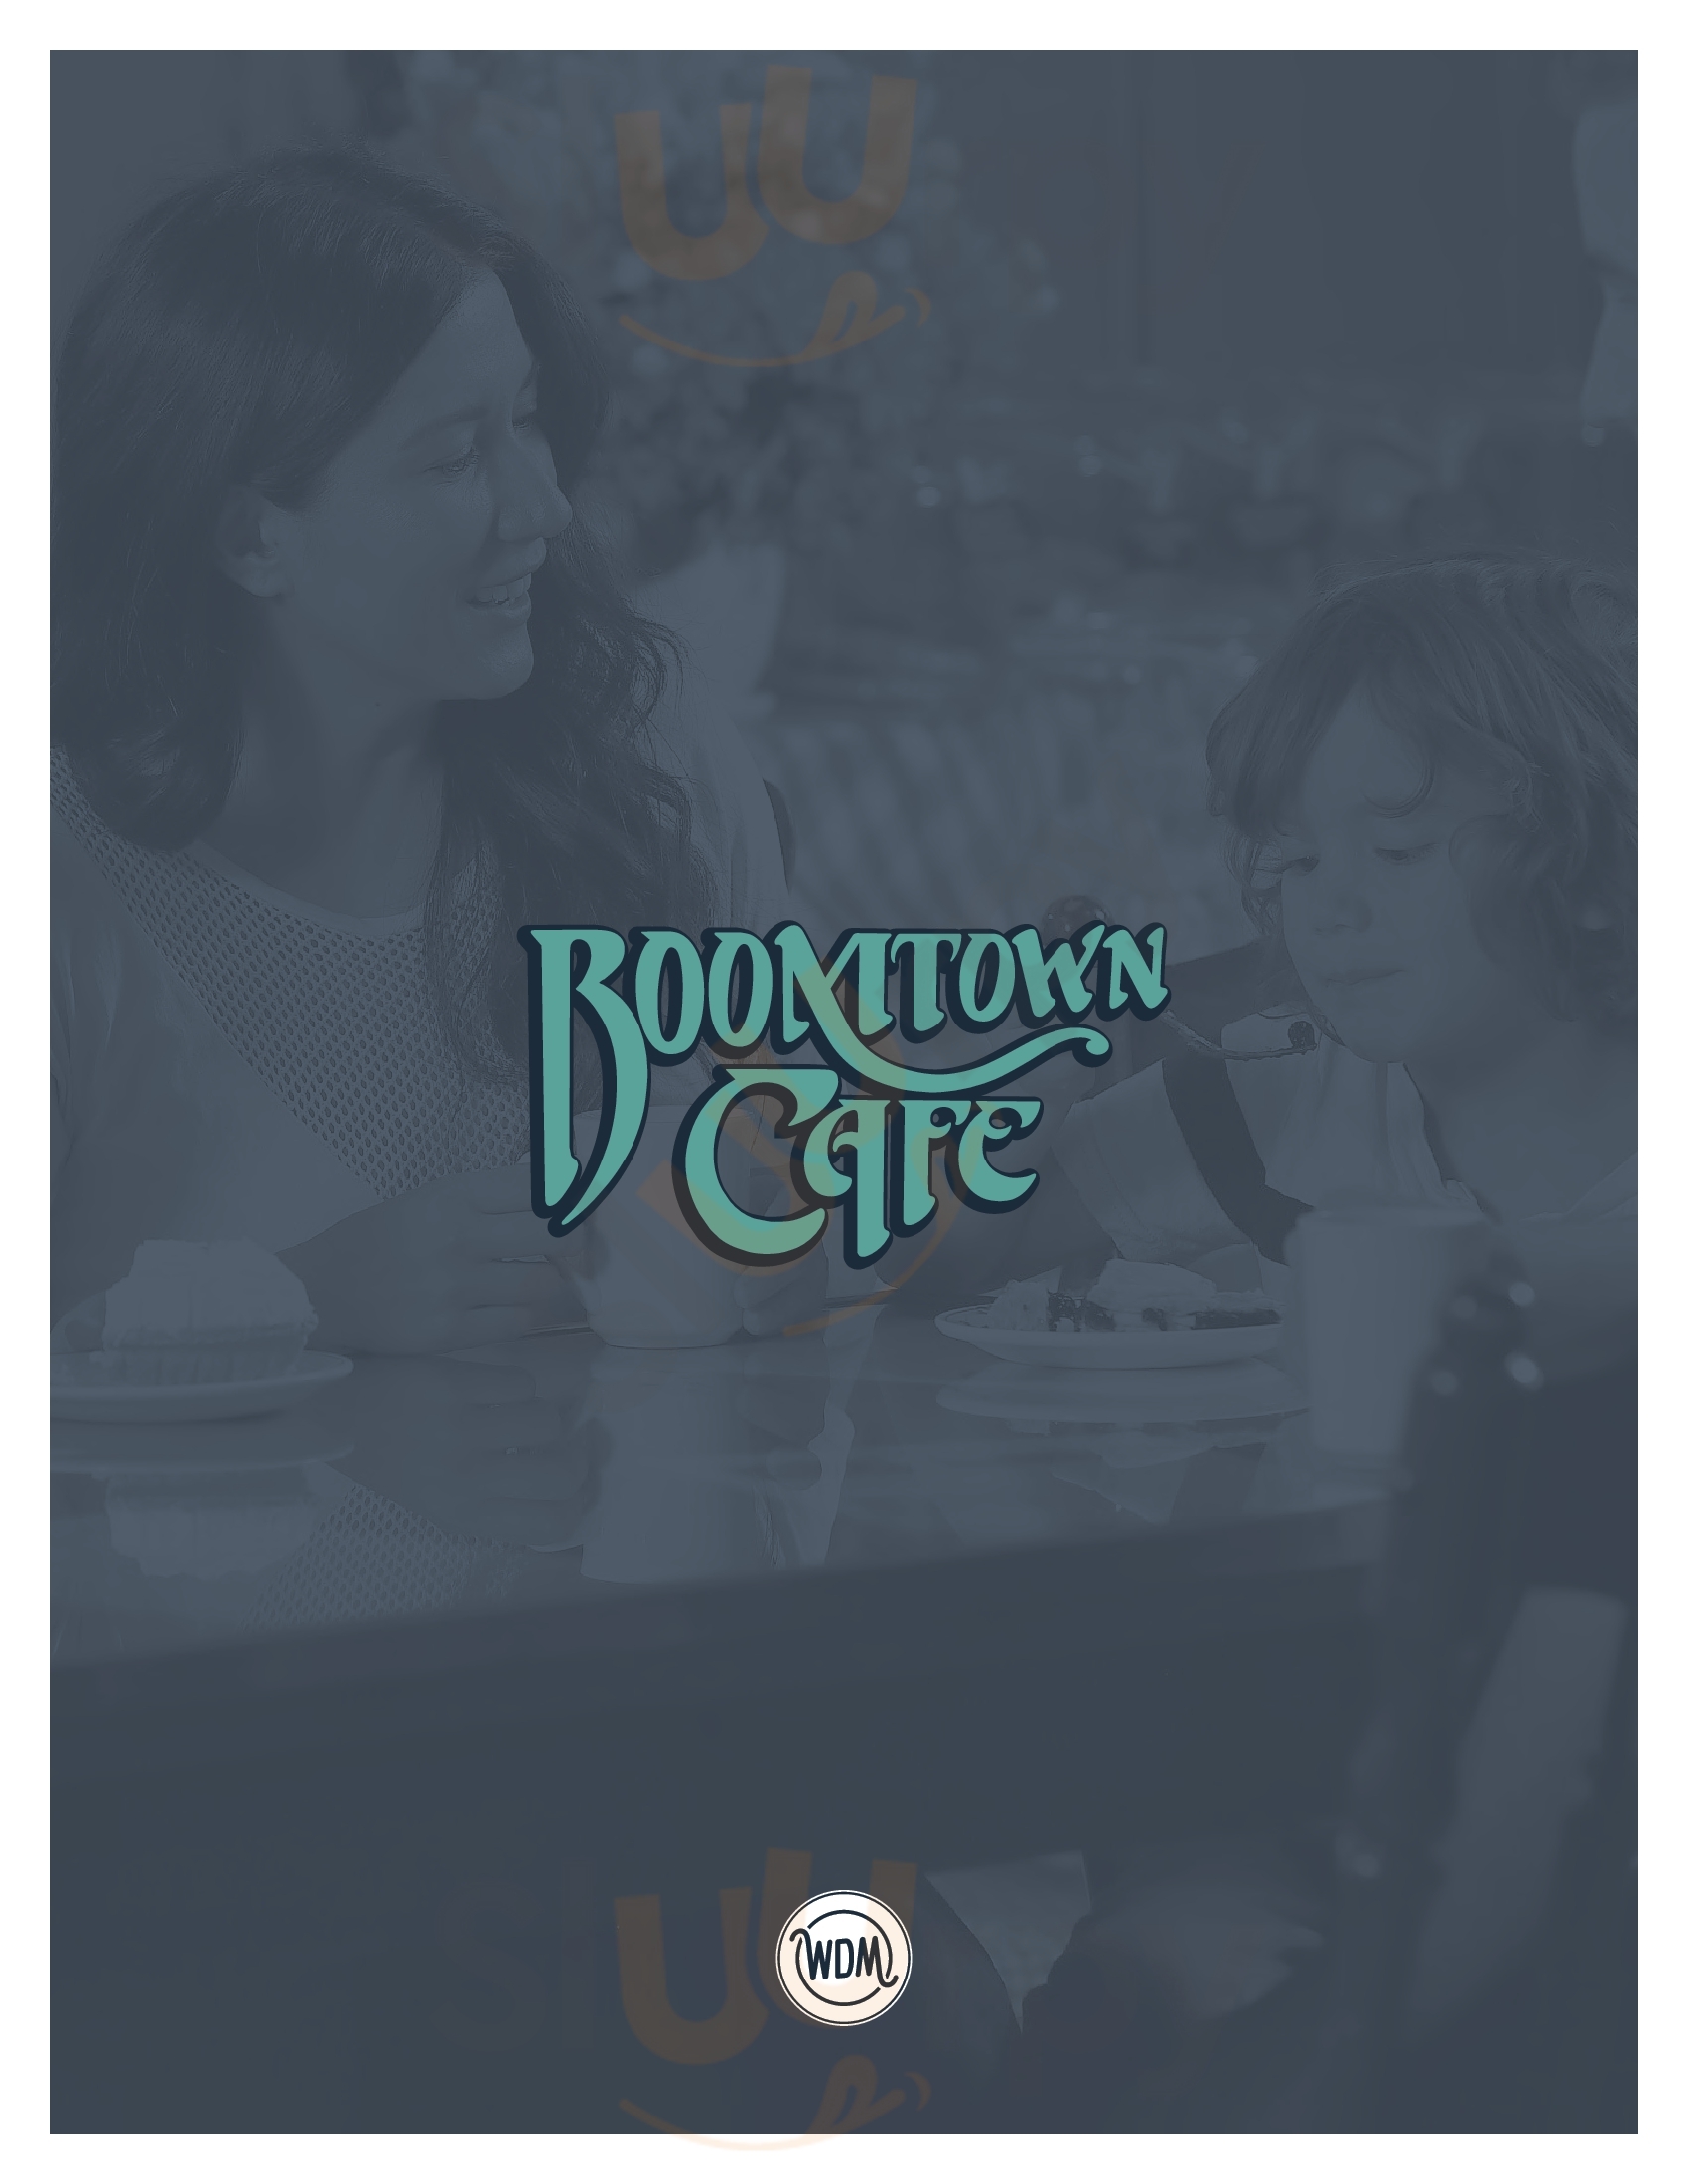 Boomtown Cafe Saskatoon Menu - 1